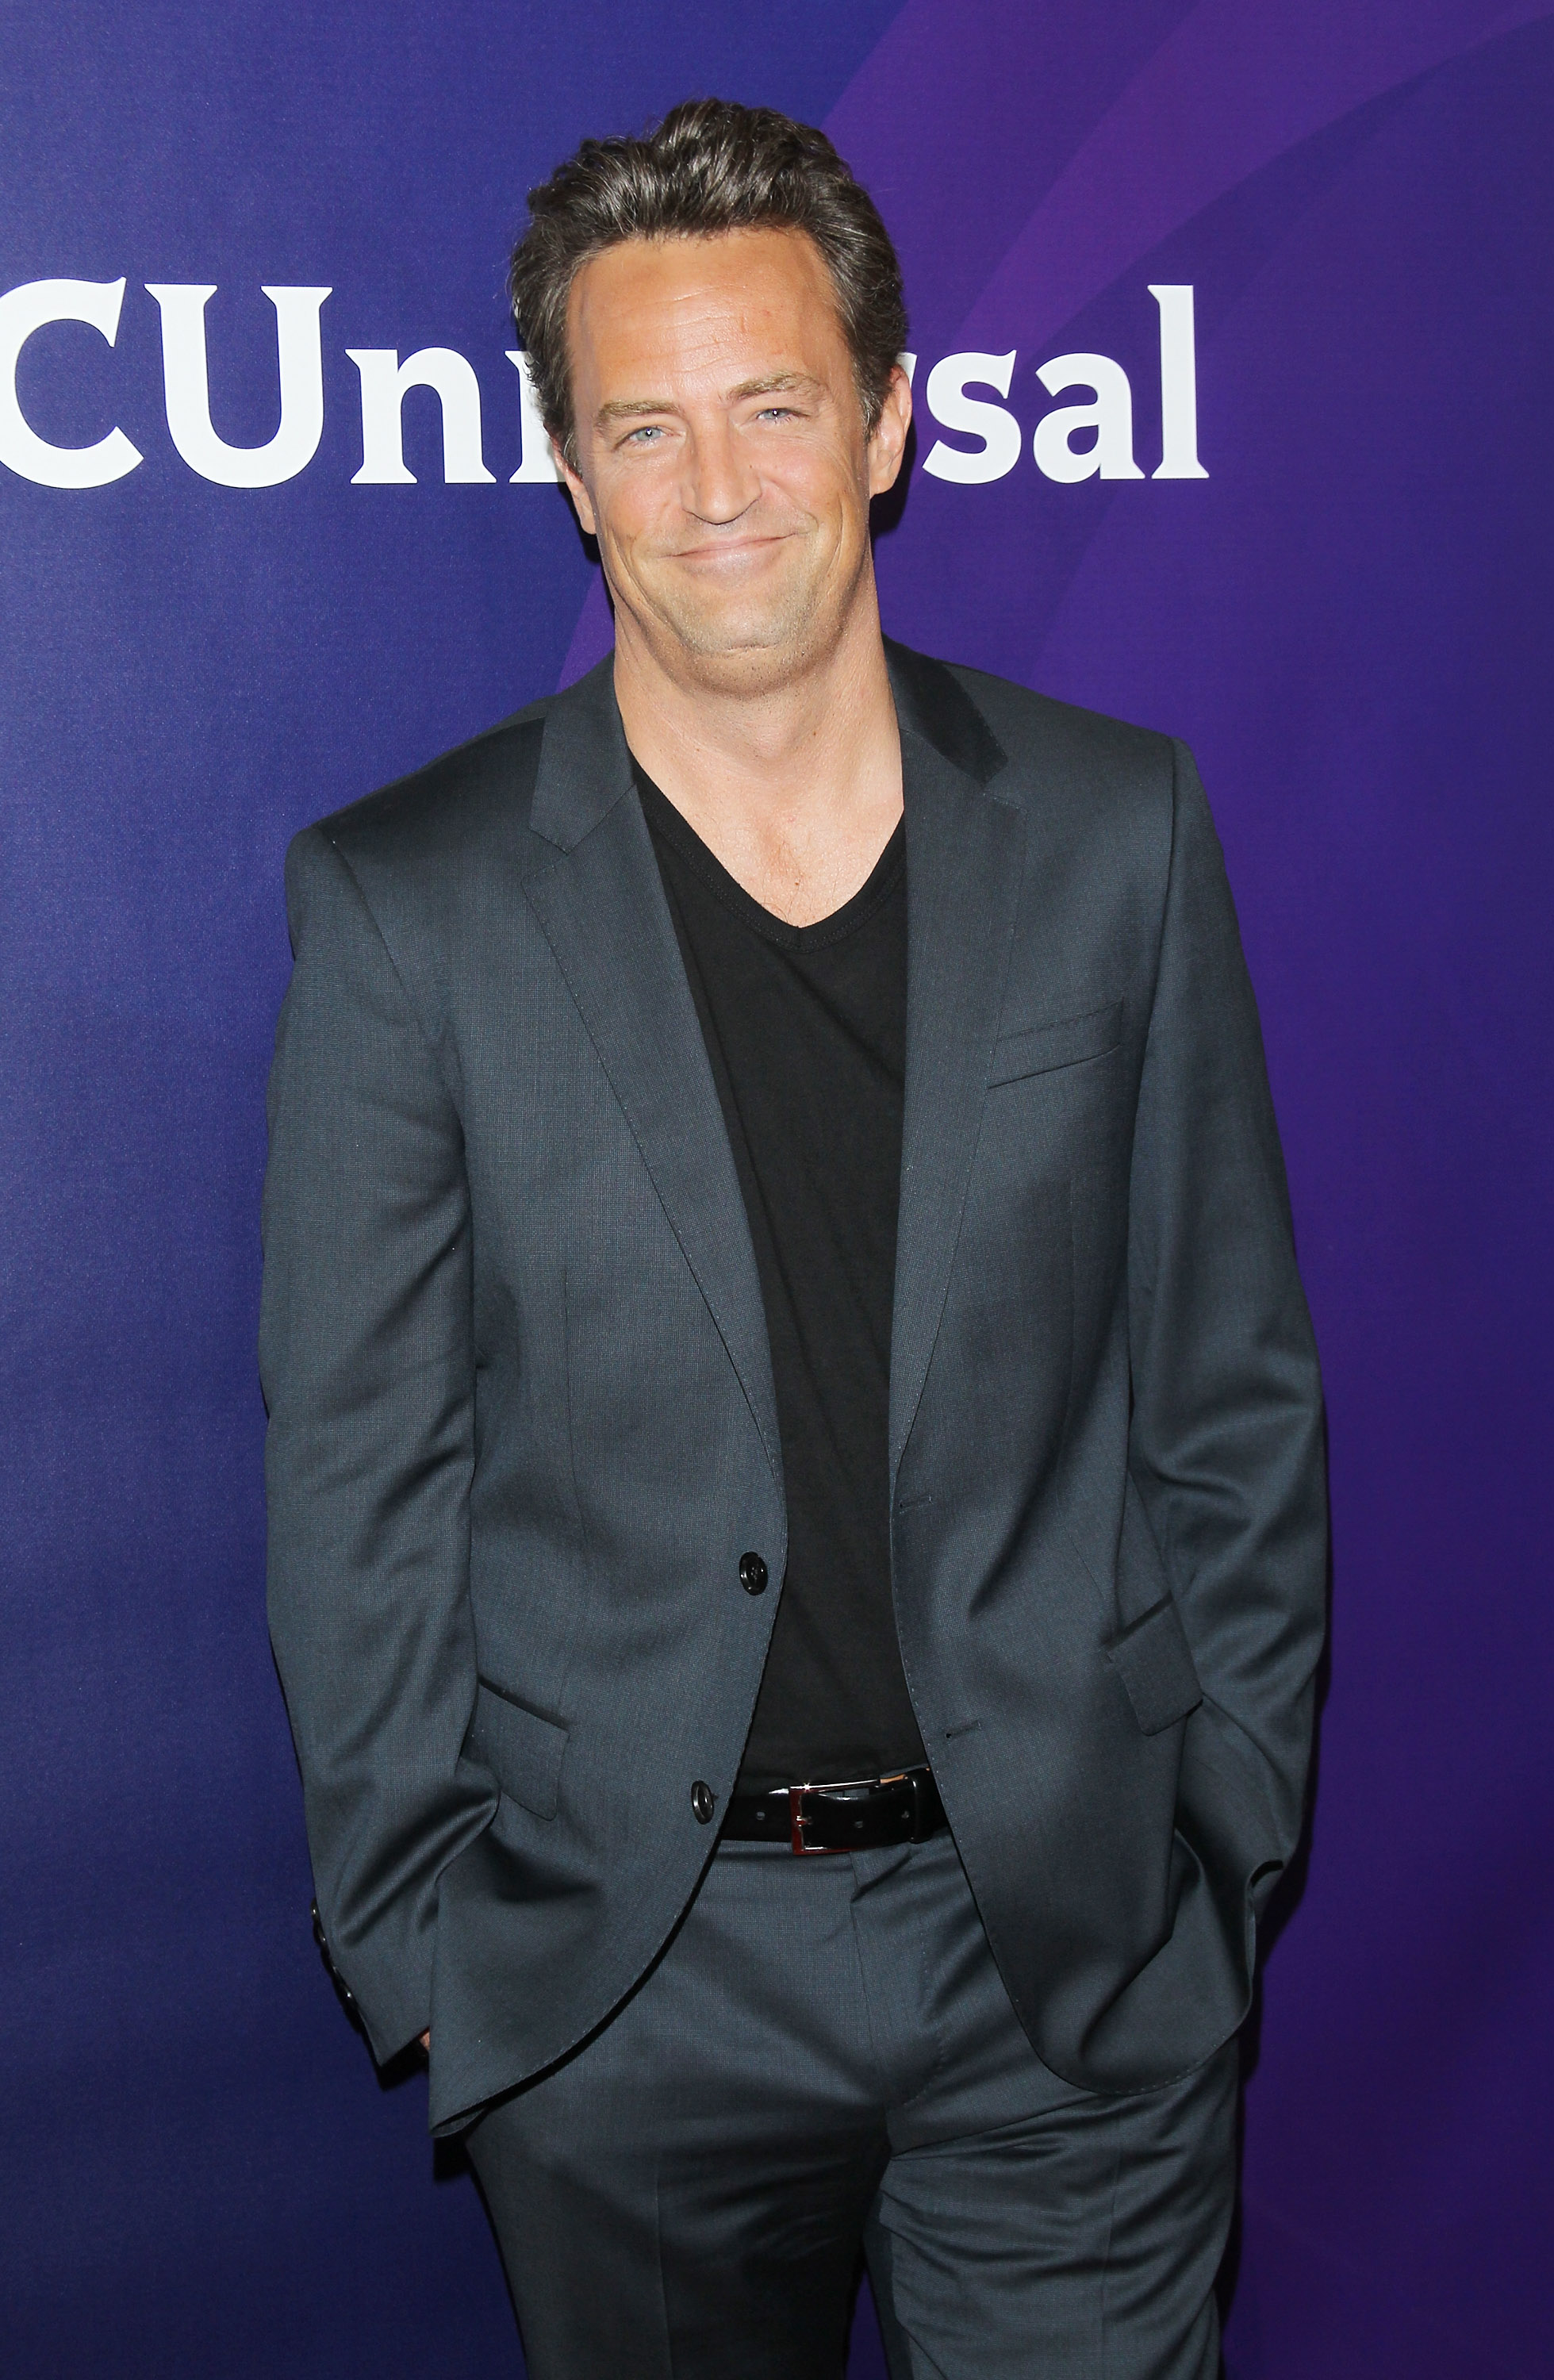 Matthew Perry lors du TCA Summer press tour - NBC photo call - Day 1 à Beverly Hills, Californie le 24 juillet 2012 | Source : Getty Images